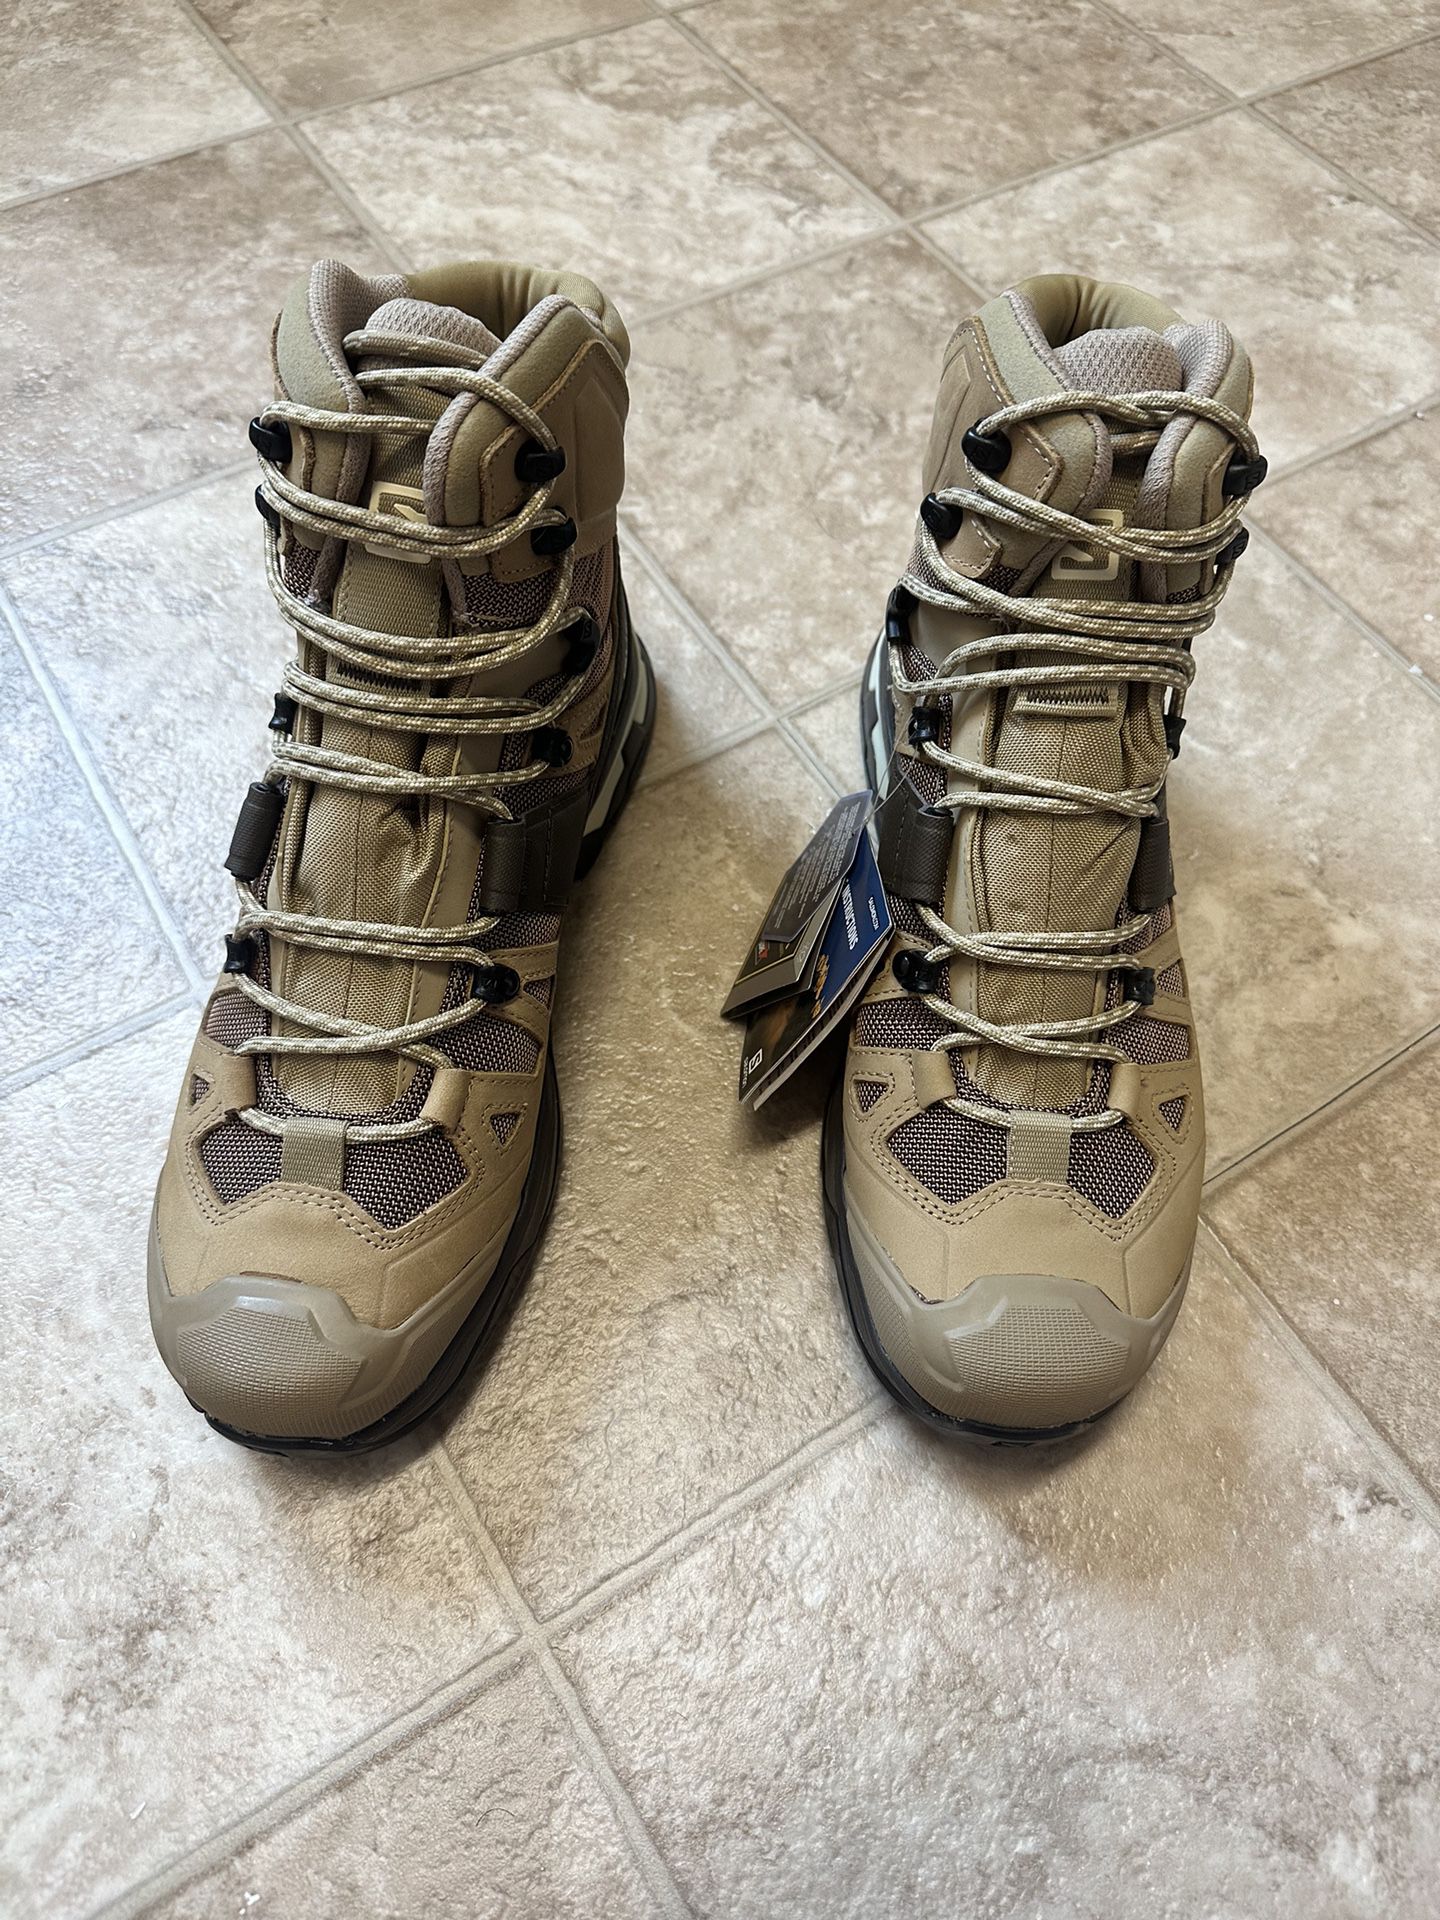 Salomon Hiking Boots